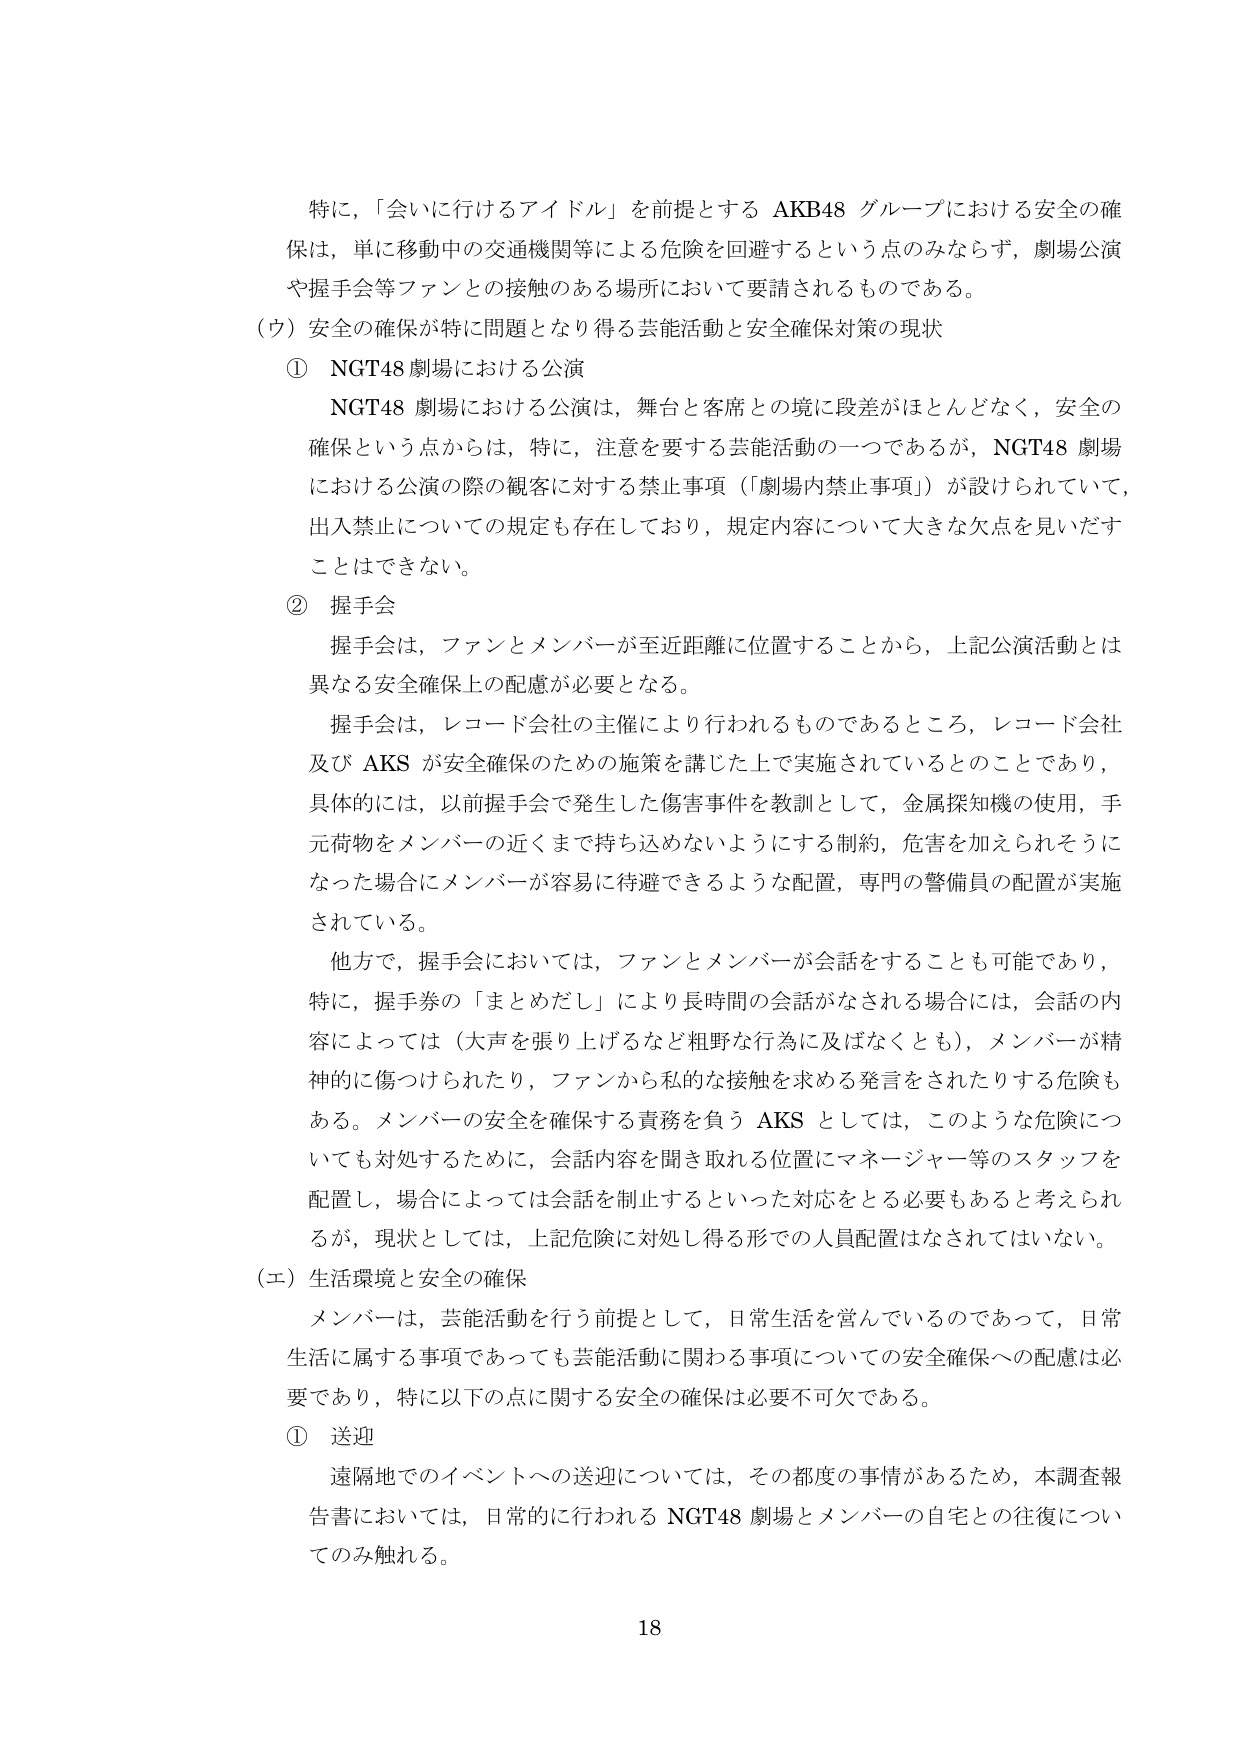 NGT48第三者委員会調査報告書20